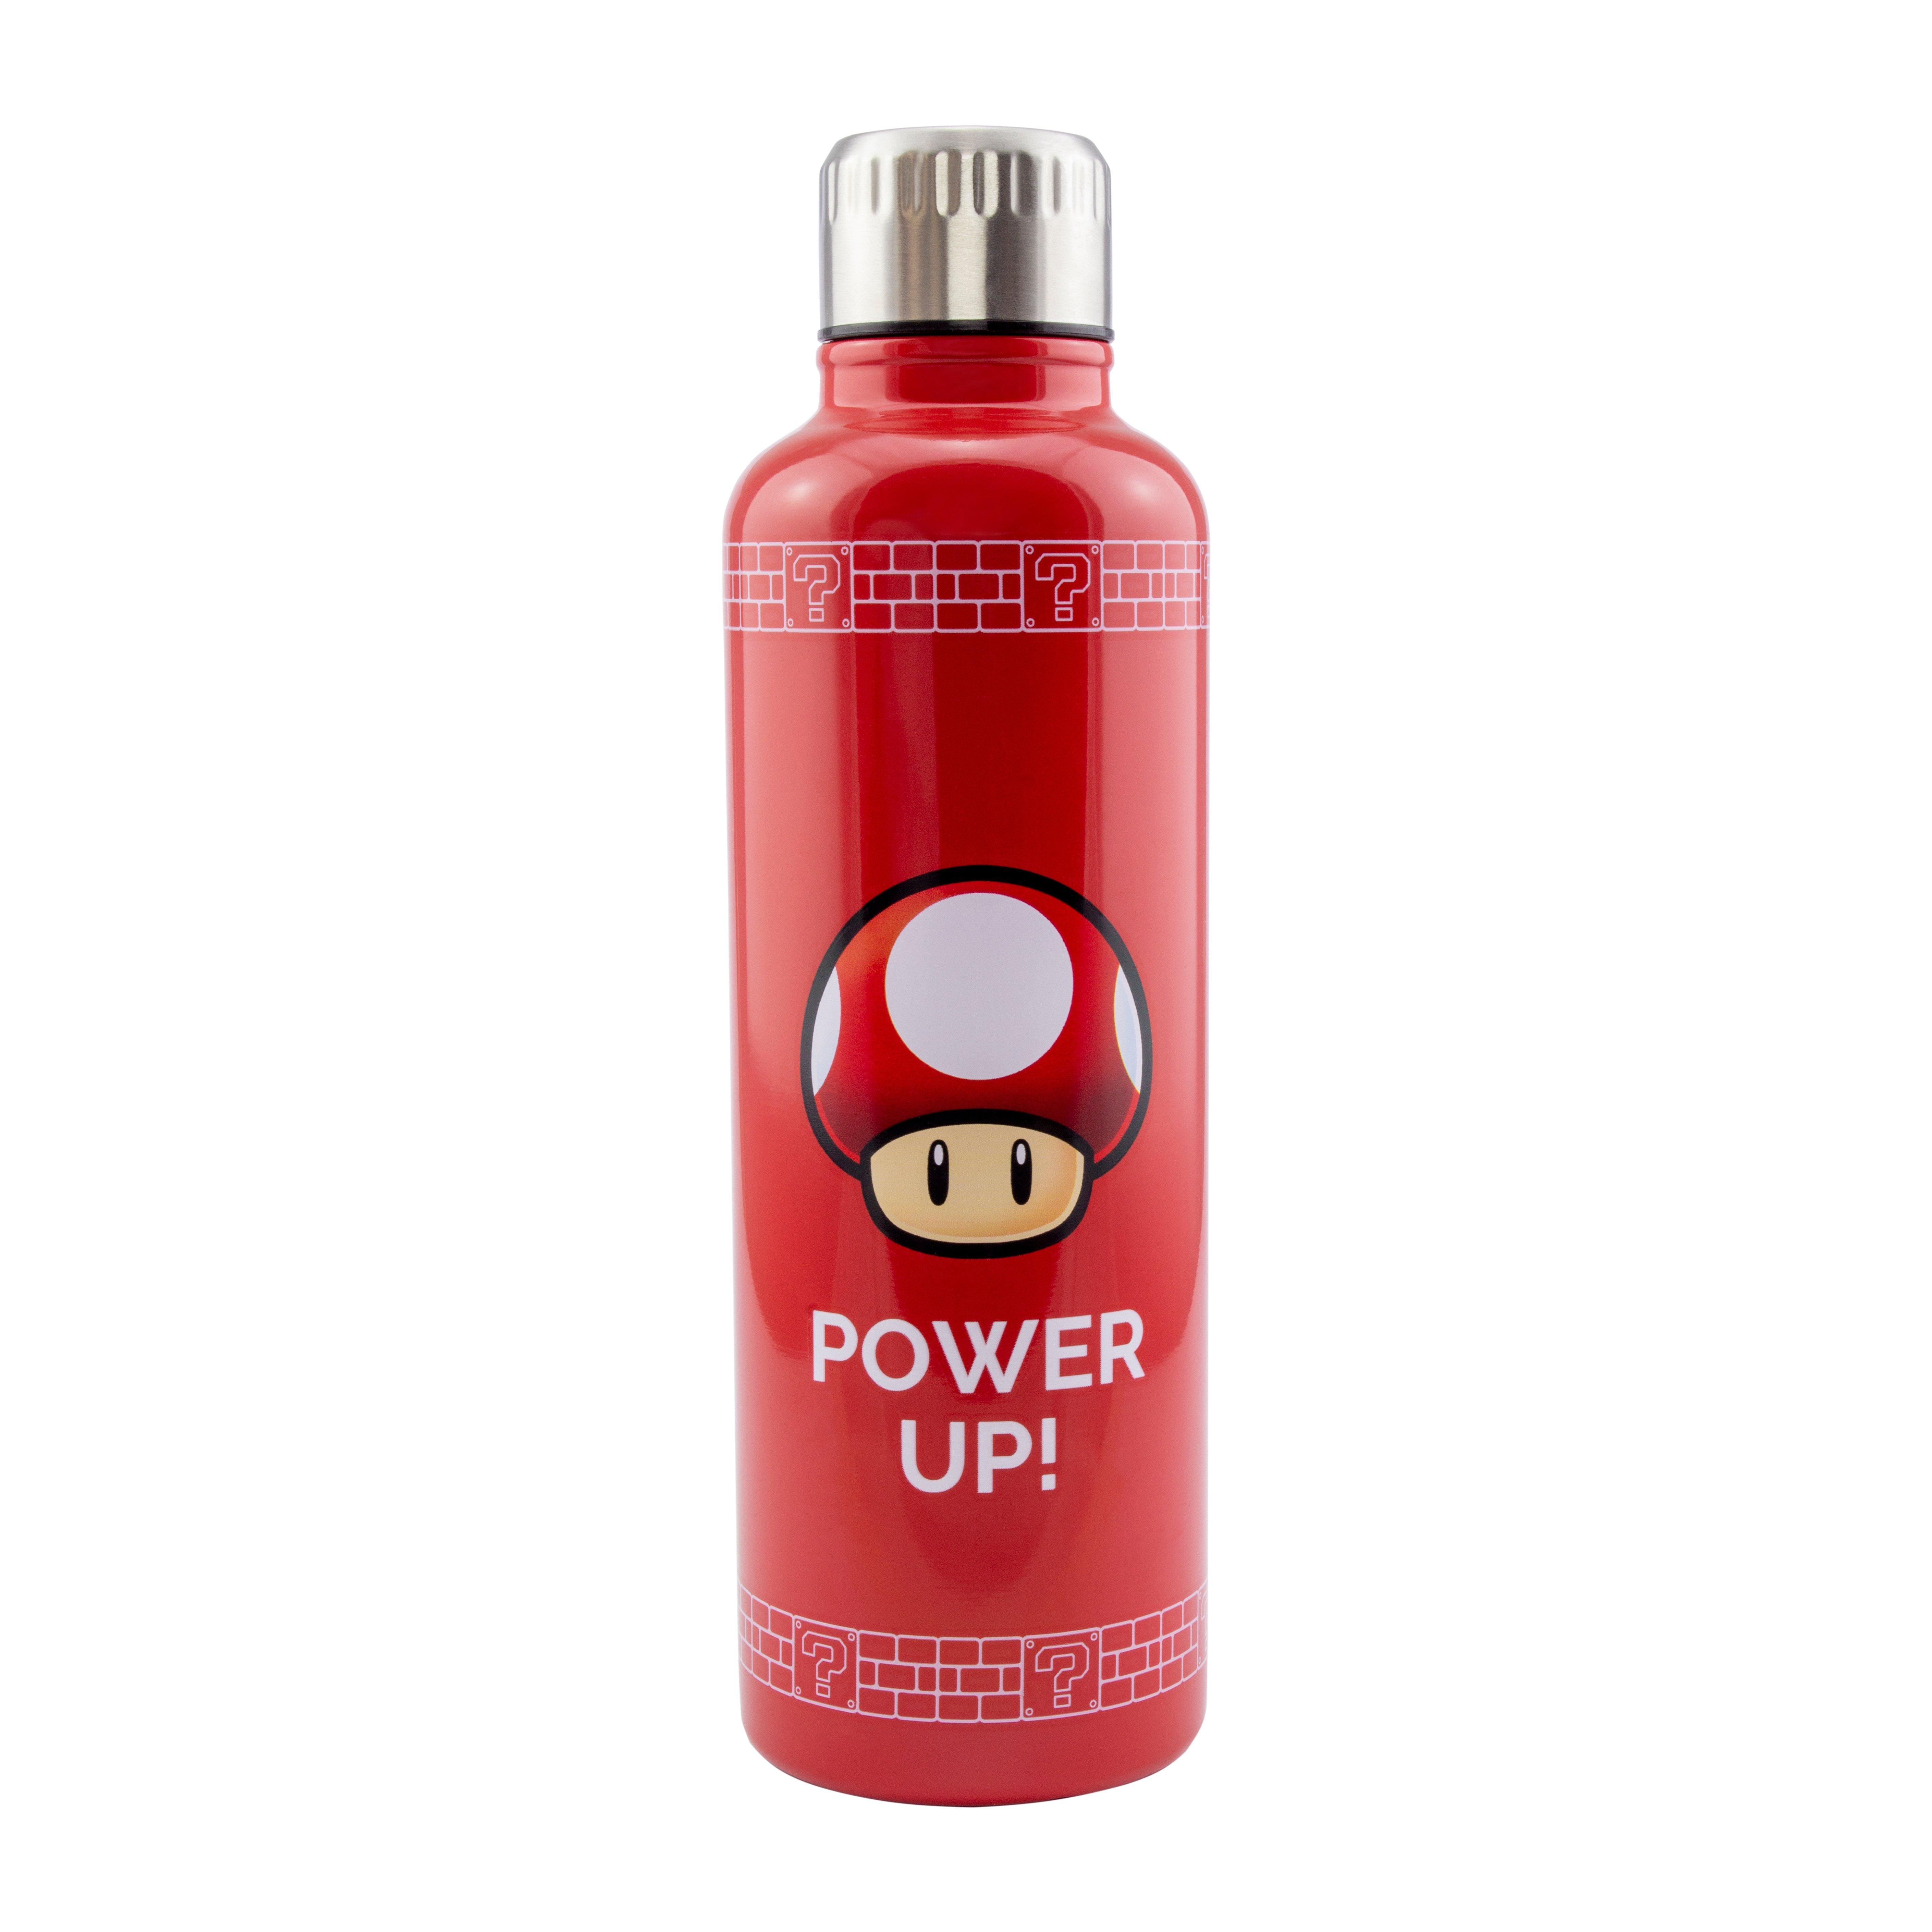 https://media.gamestop.com/i/gamestop/20002865/Super-Mario-Big-Up-Water-Bottle?$pdp$